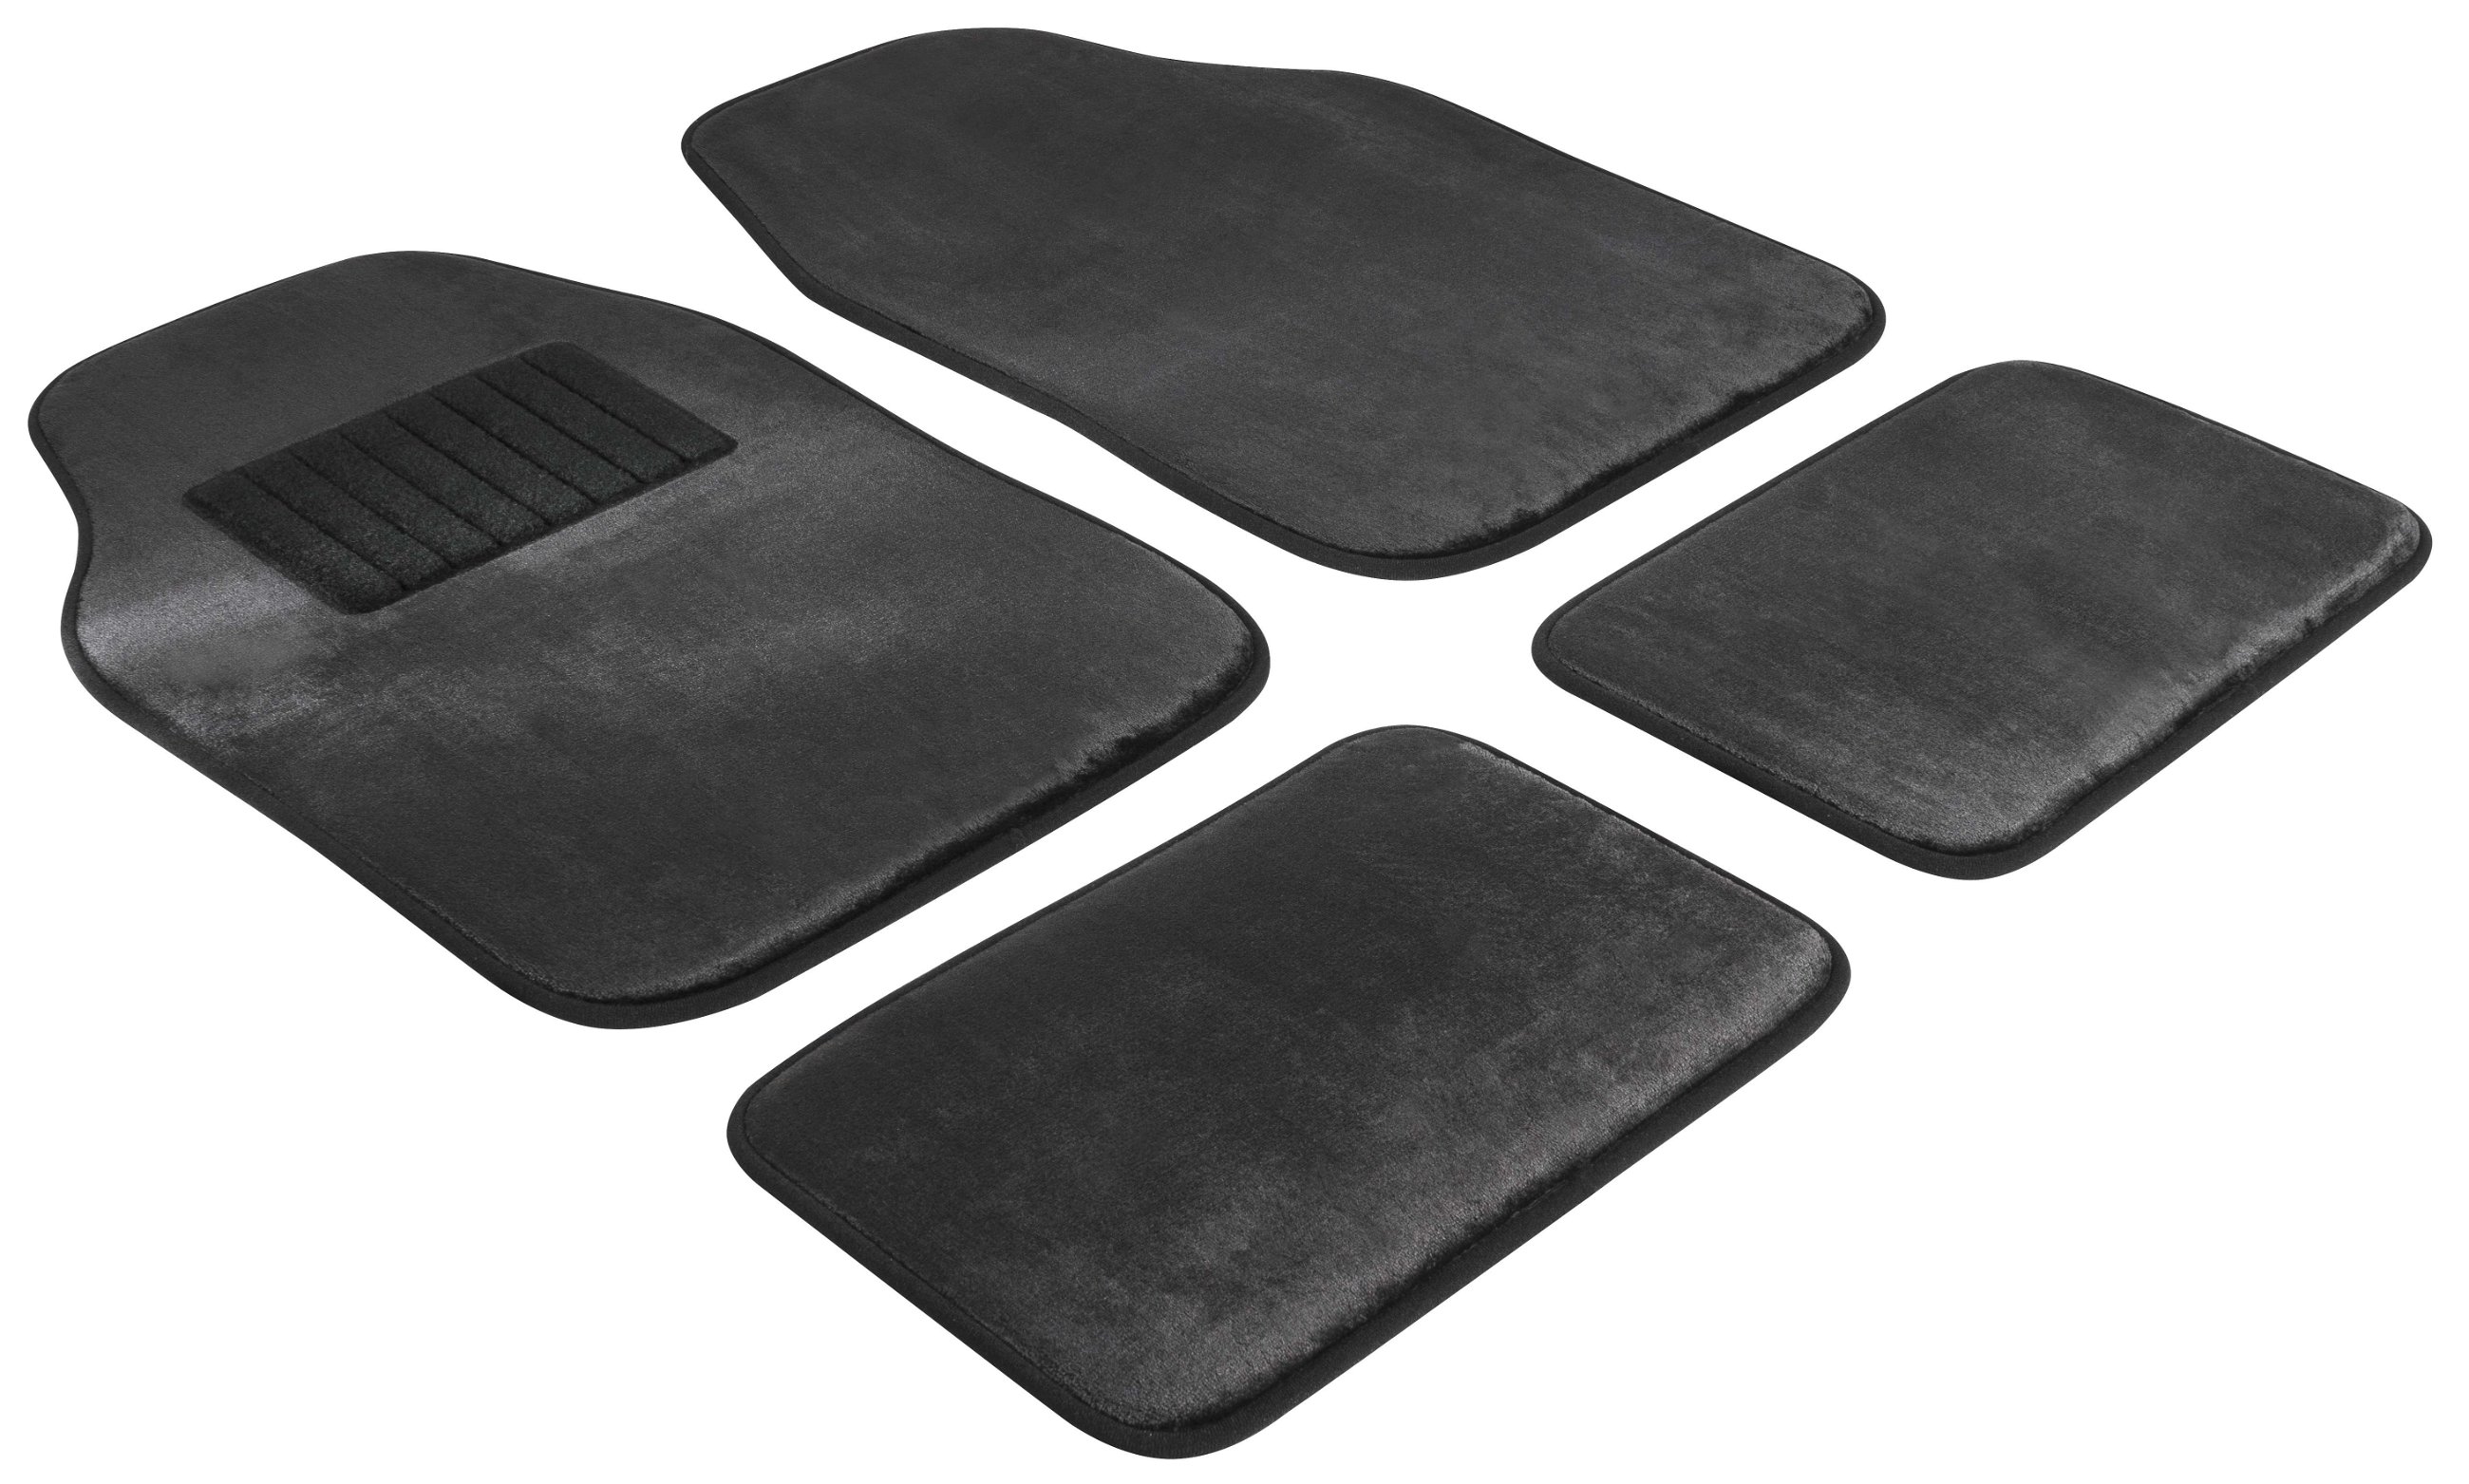 Autoteppich Comfort Drive Premium 12mm Velours 4tlg. schwarz